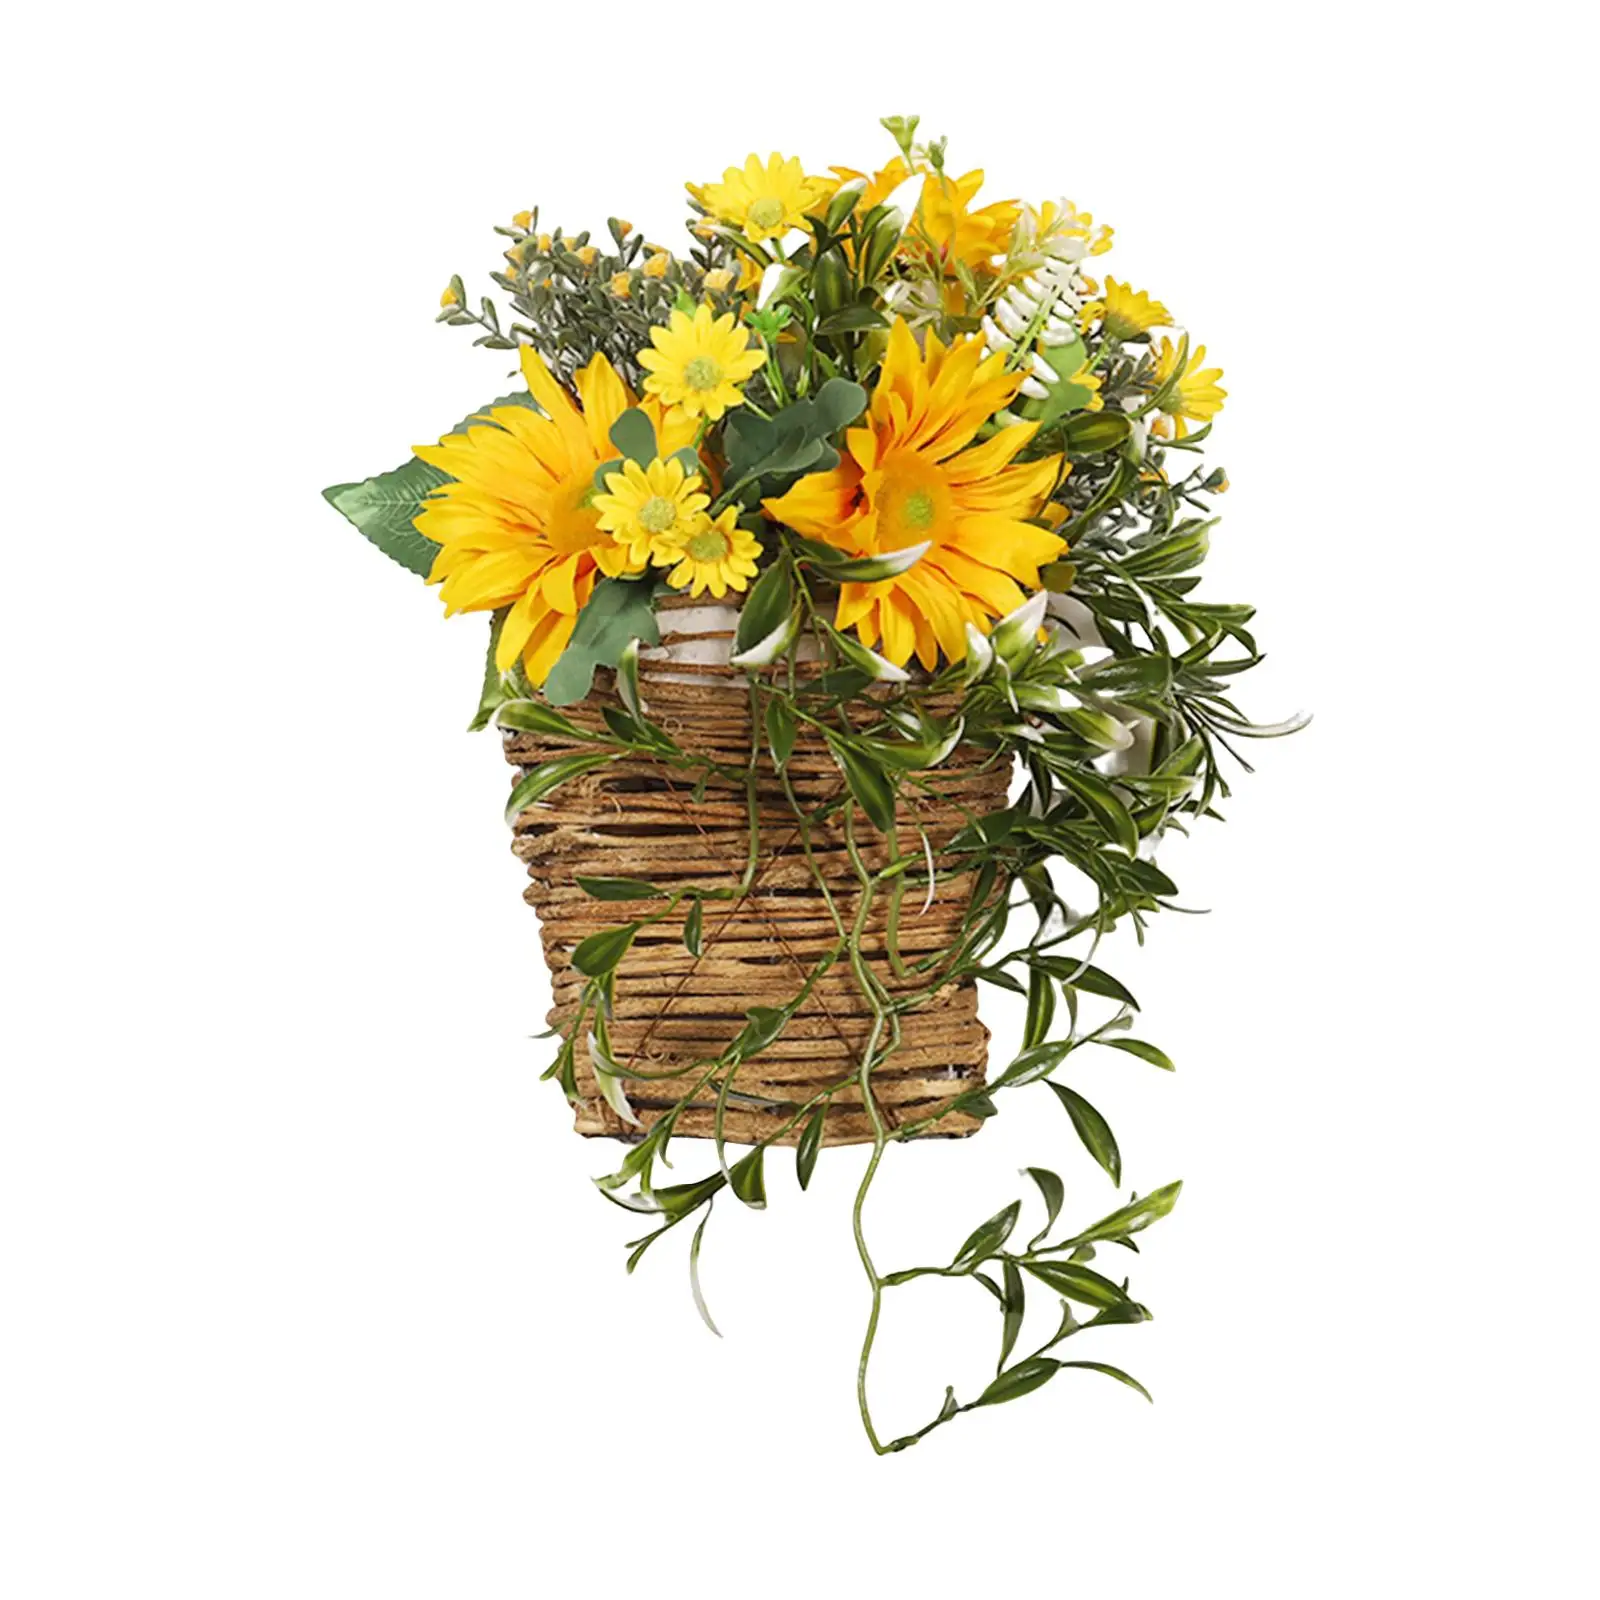 Flower Basket Wreath Farmhouse Wreath for Window Home Wedding Decoration